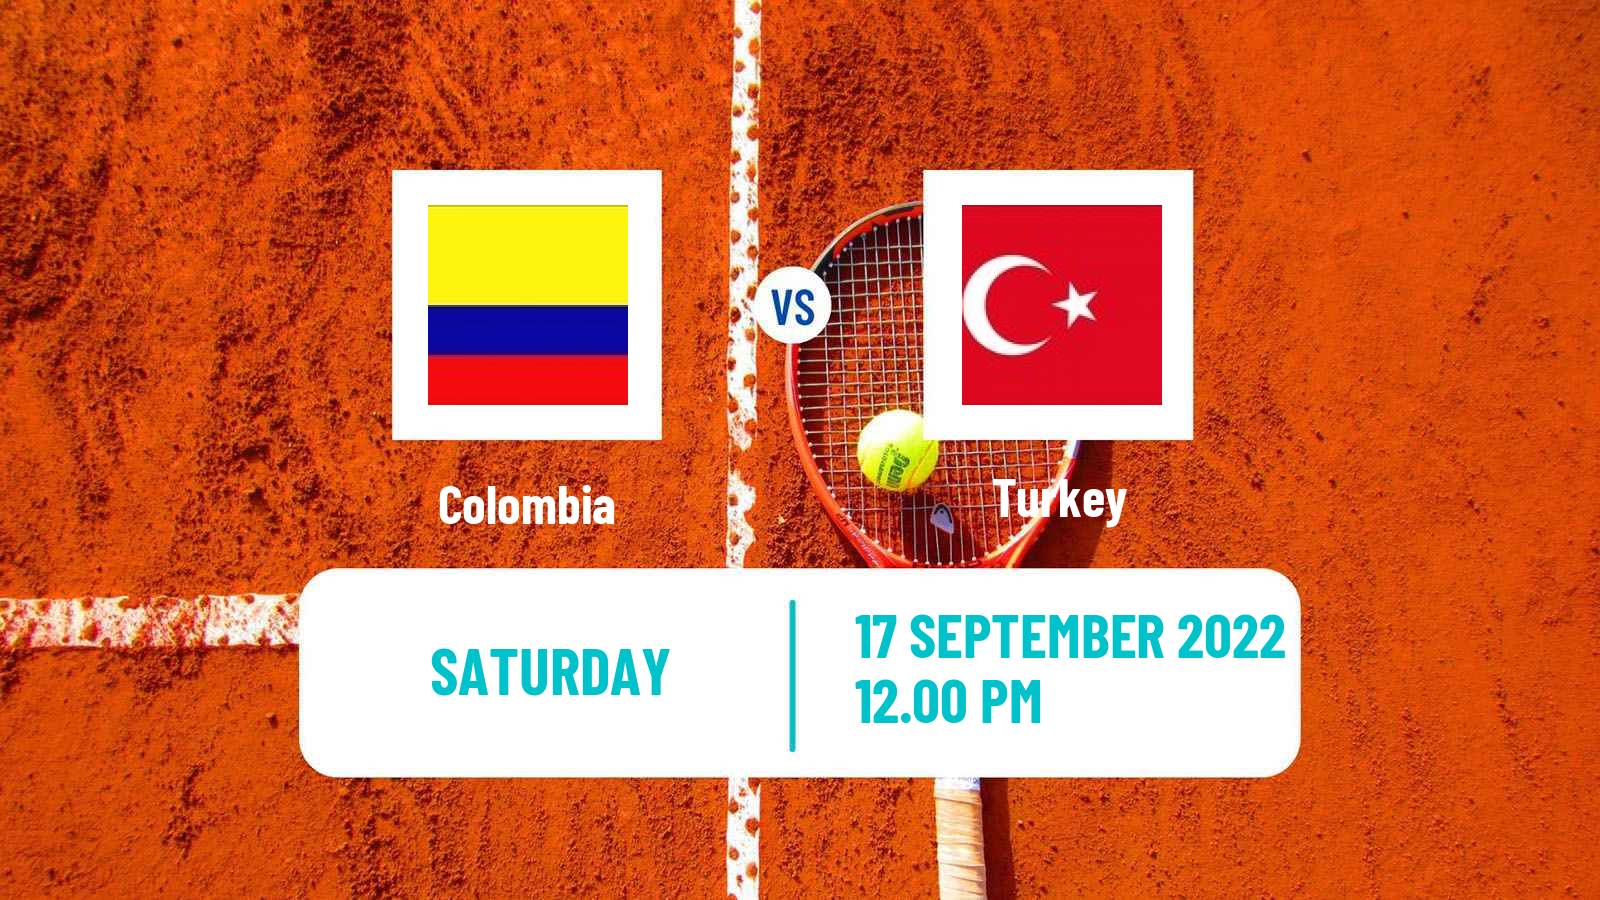 Tennis Davis Cup World Group I Teams Colombia - Turkey